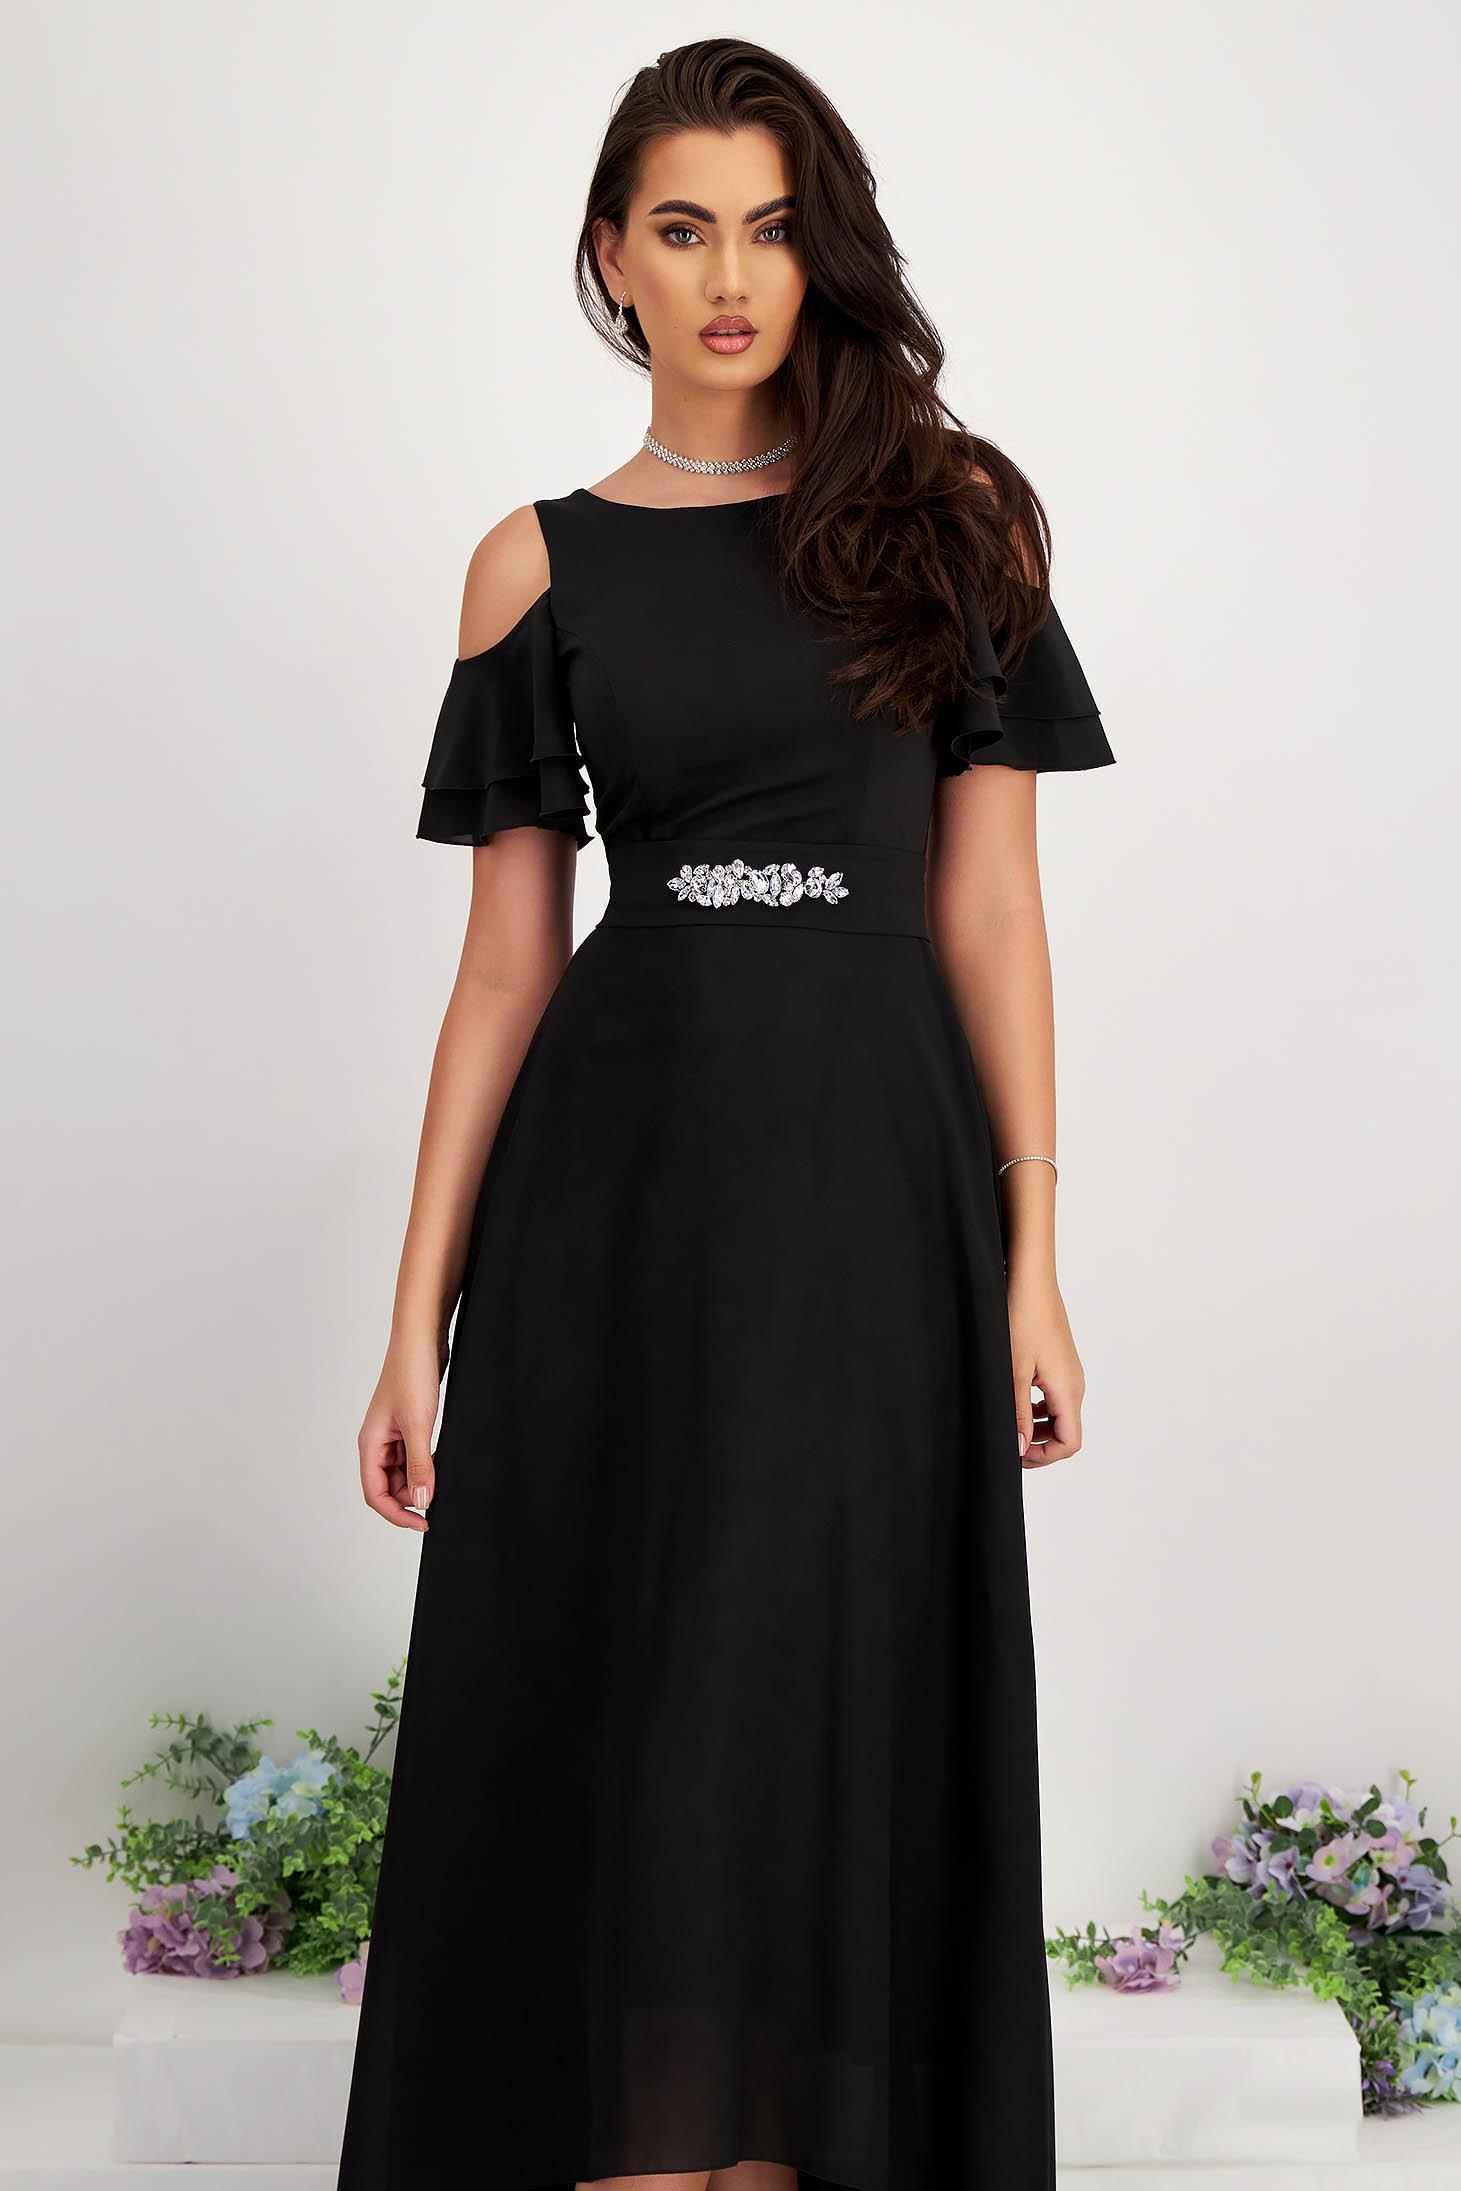 Asymmetrical Long Black Chiffon Dress with Cut-out Shoulders - StarShinerS 2 - StarShinerS.com